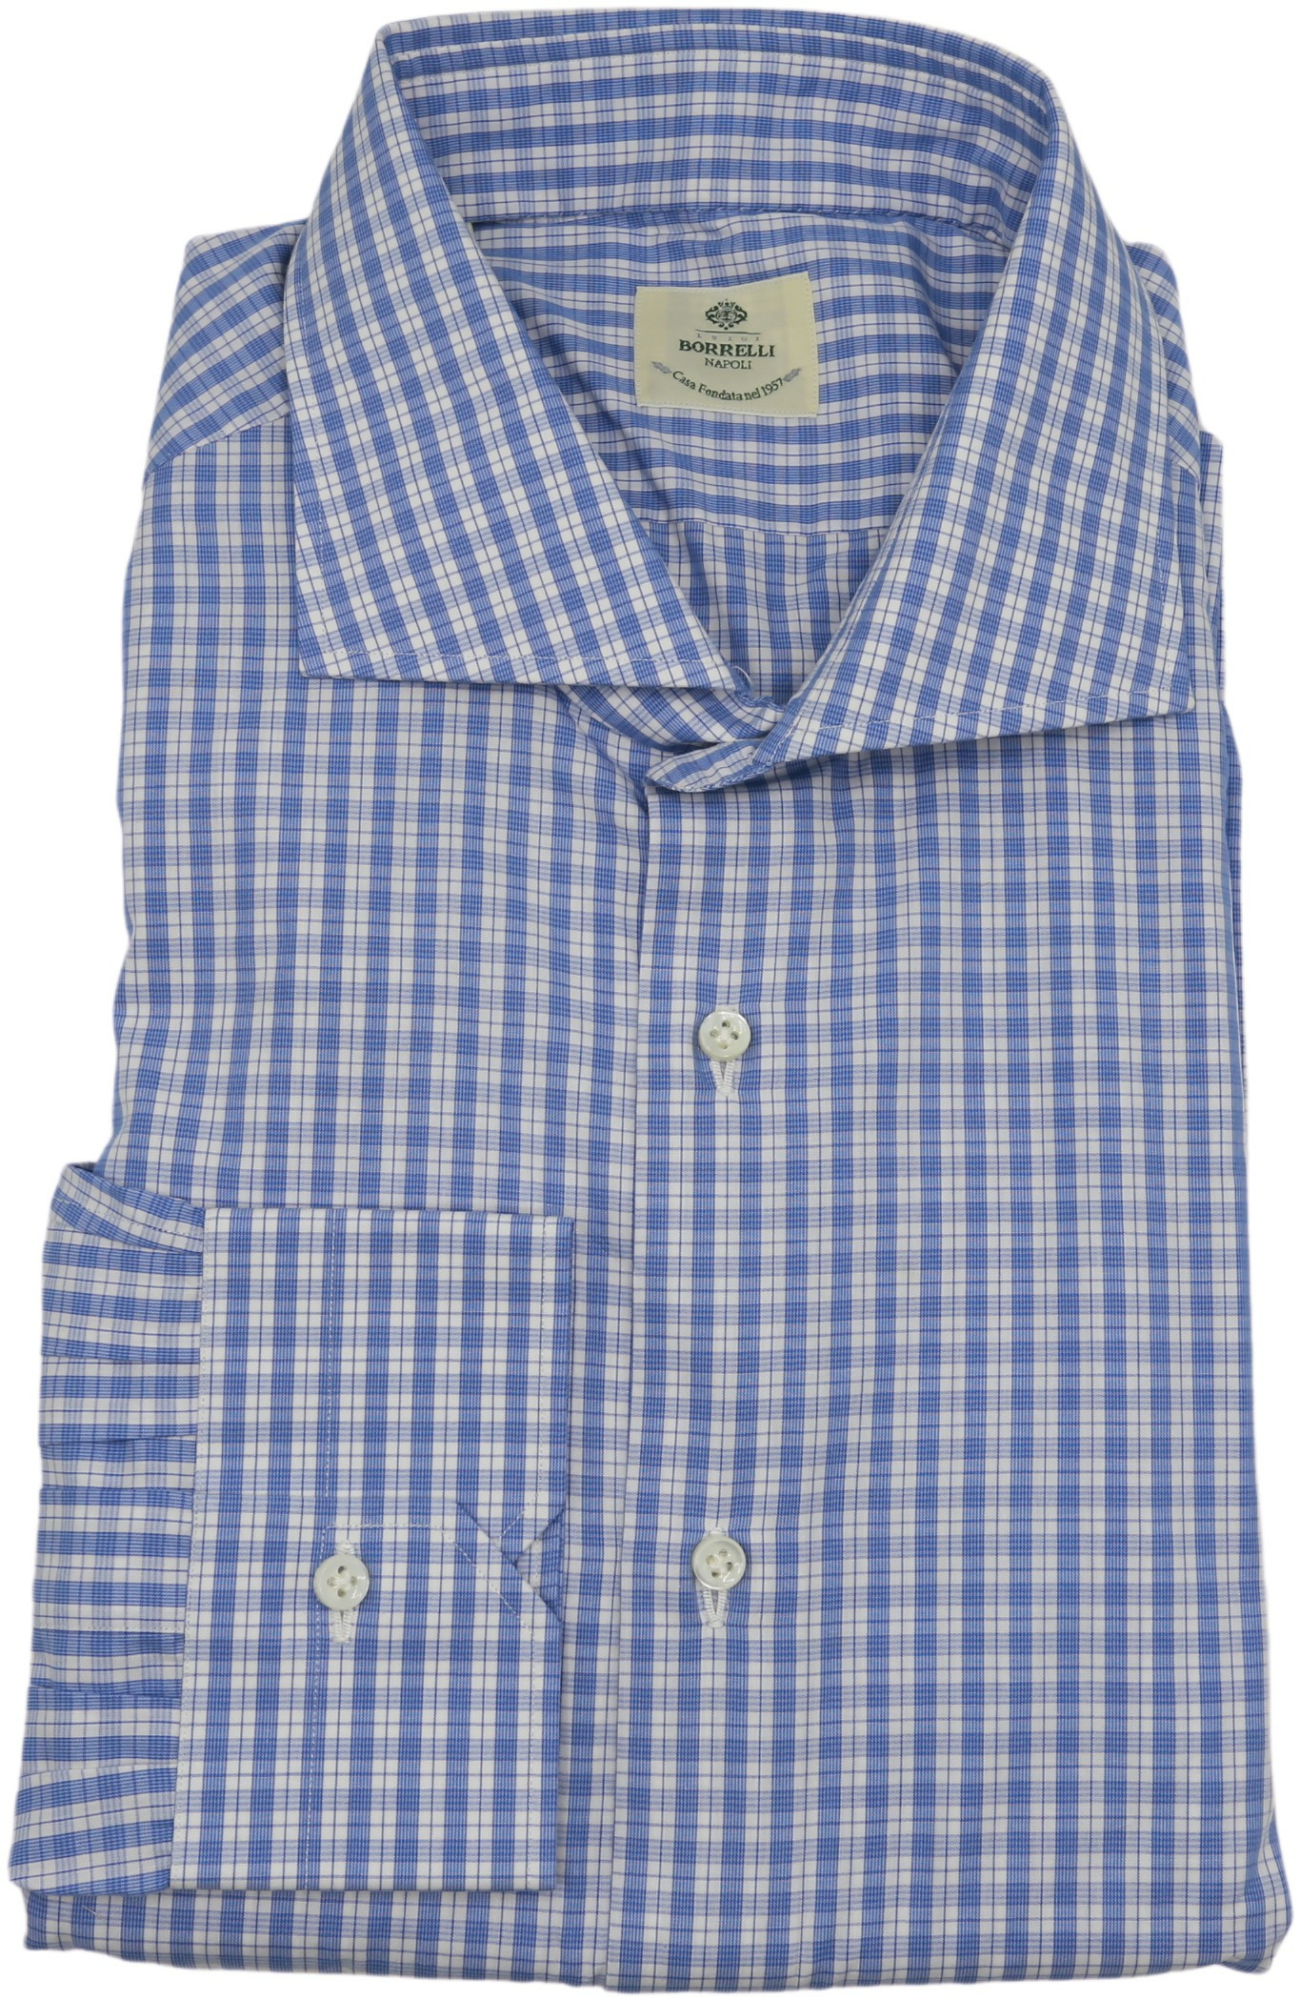 Borrelli Men's Plaid Dress Shirt | eBay